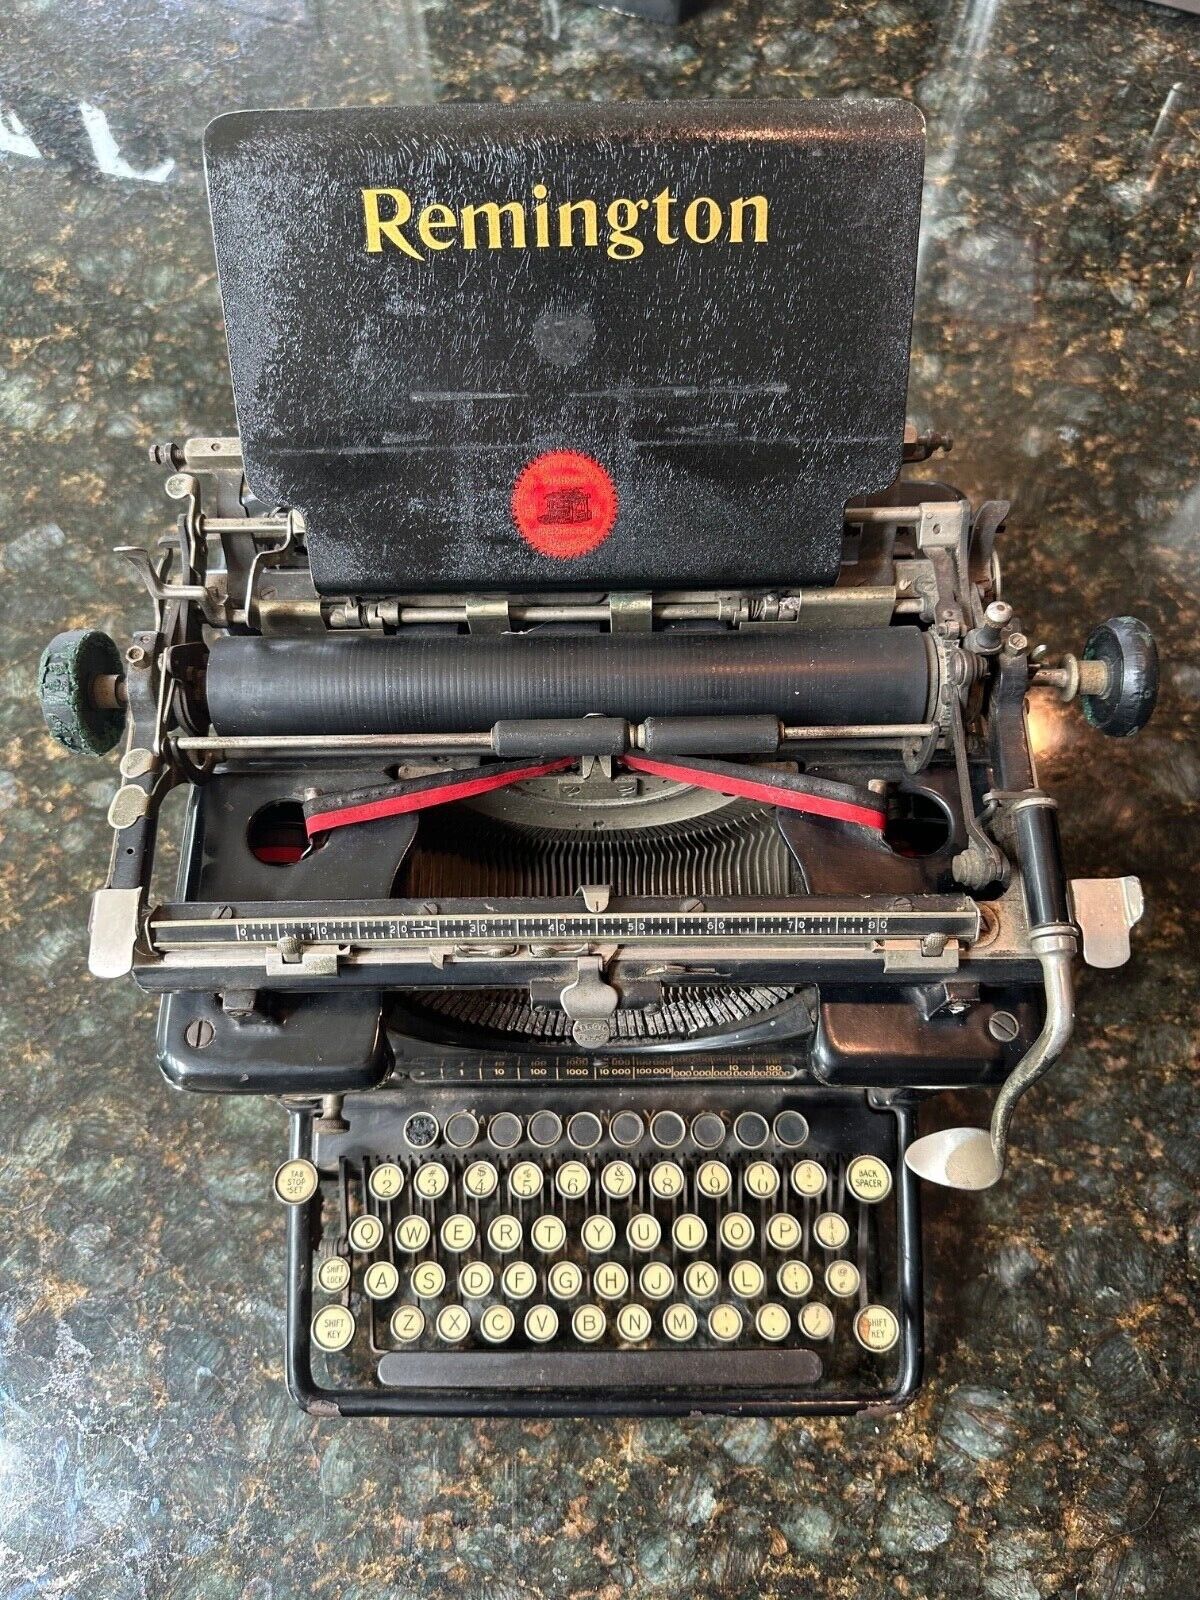 Vintage 1920's Black Remington Standard Typewriter No. 12 *Good Condition* Works